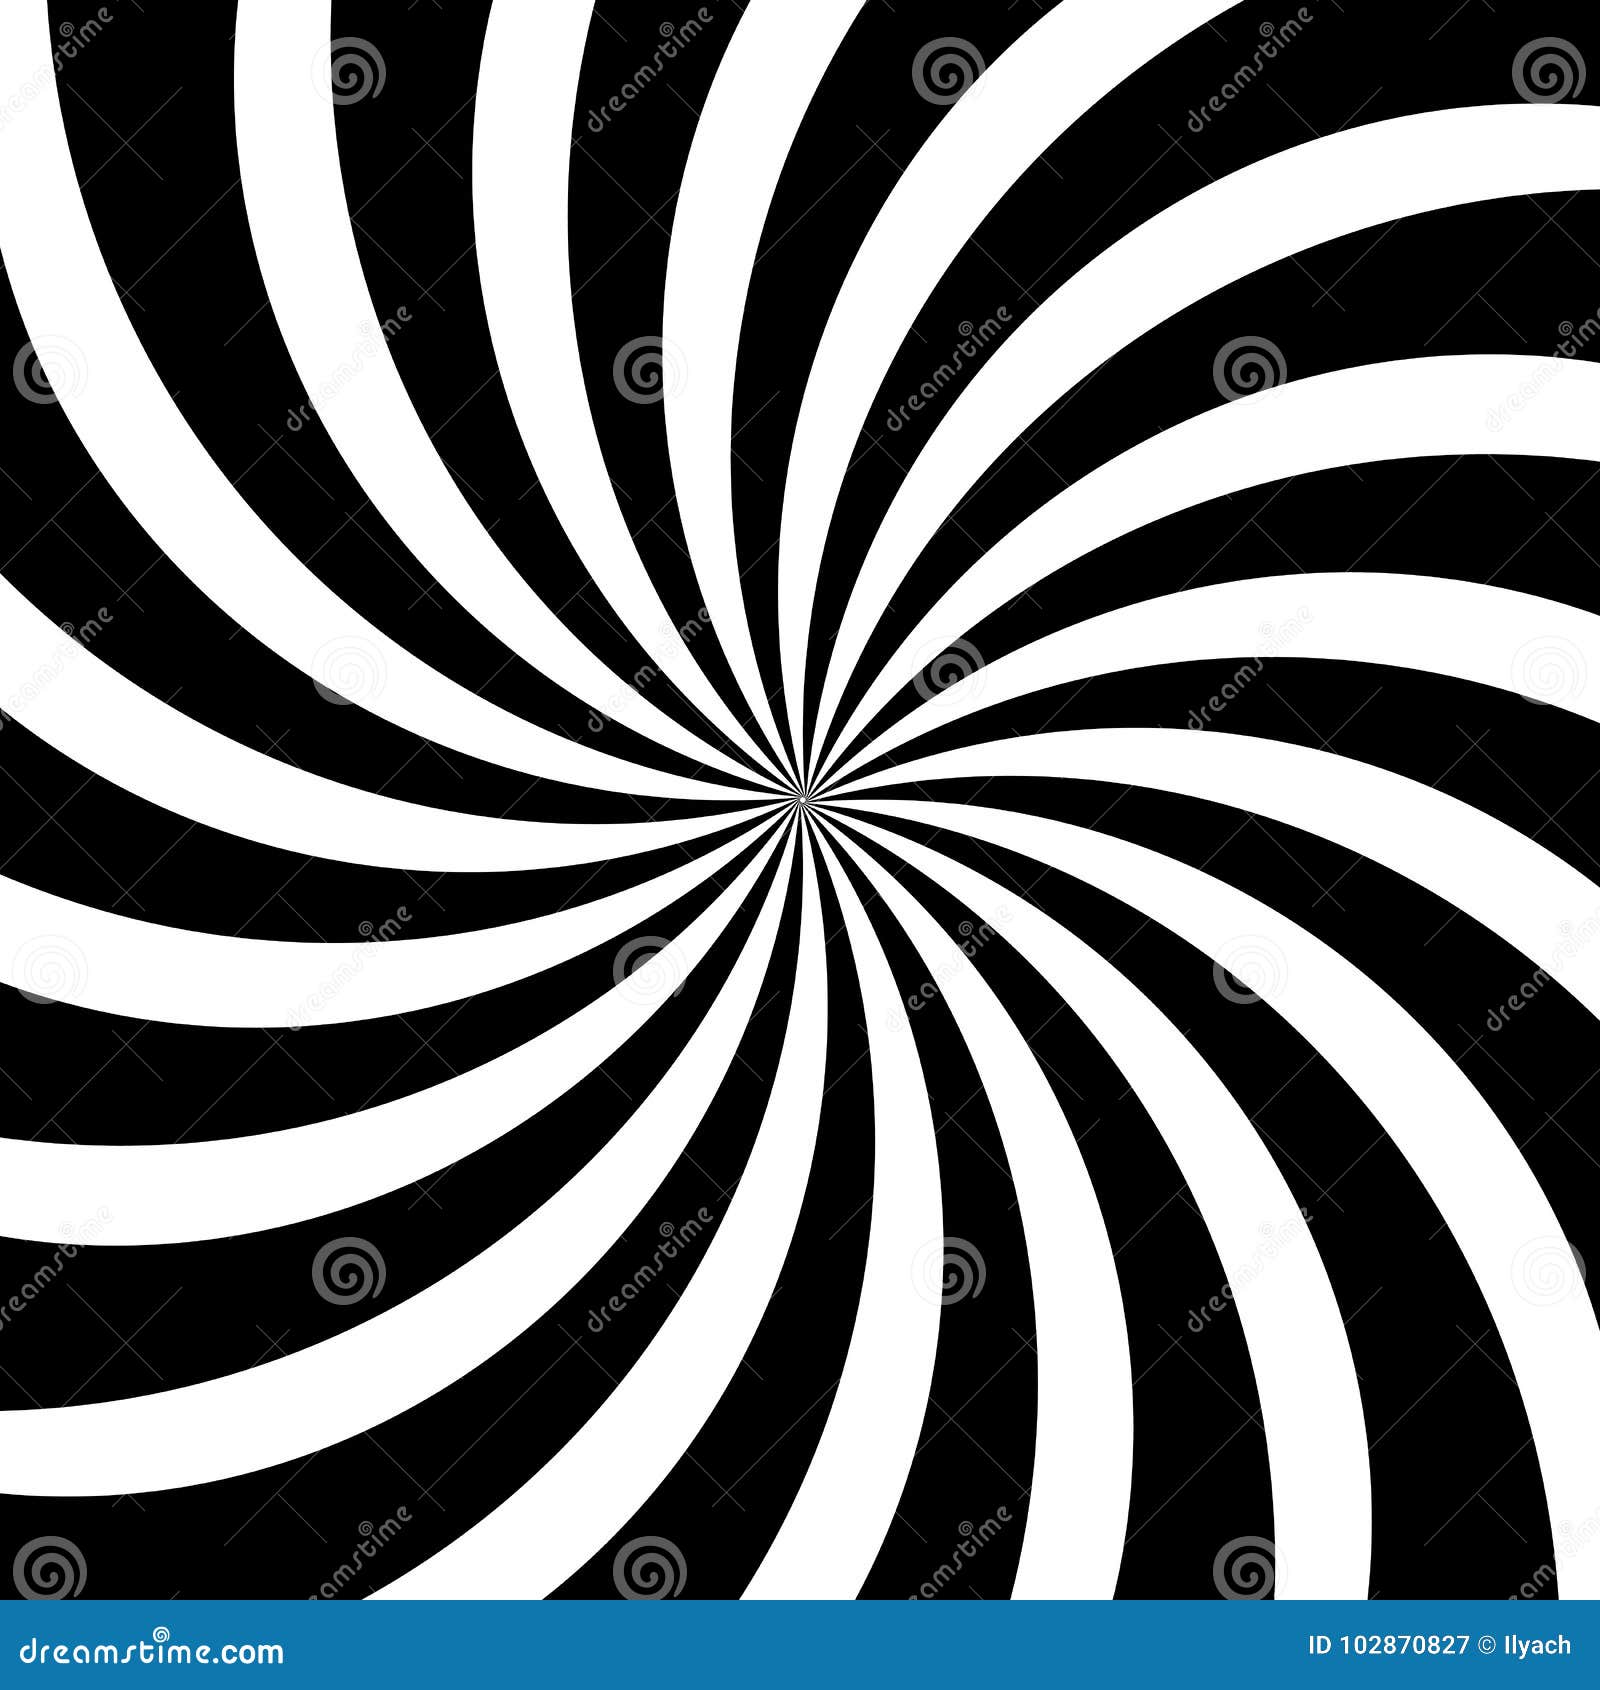 Download 620 Background Black White Vector Gratis Terbaik